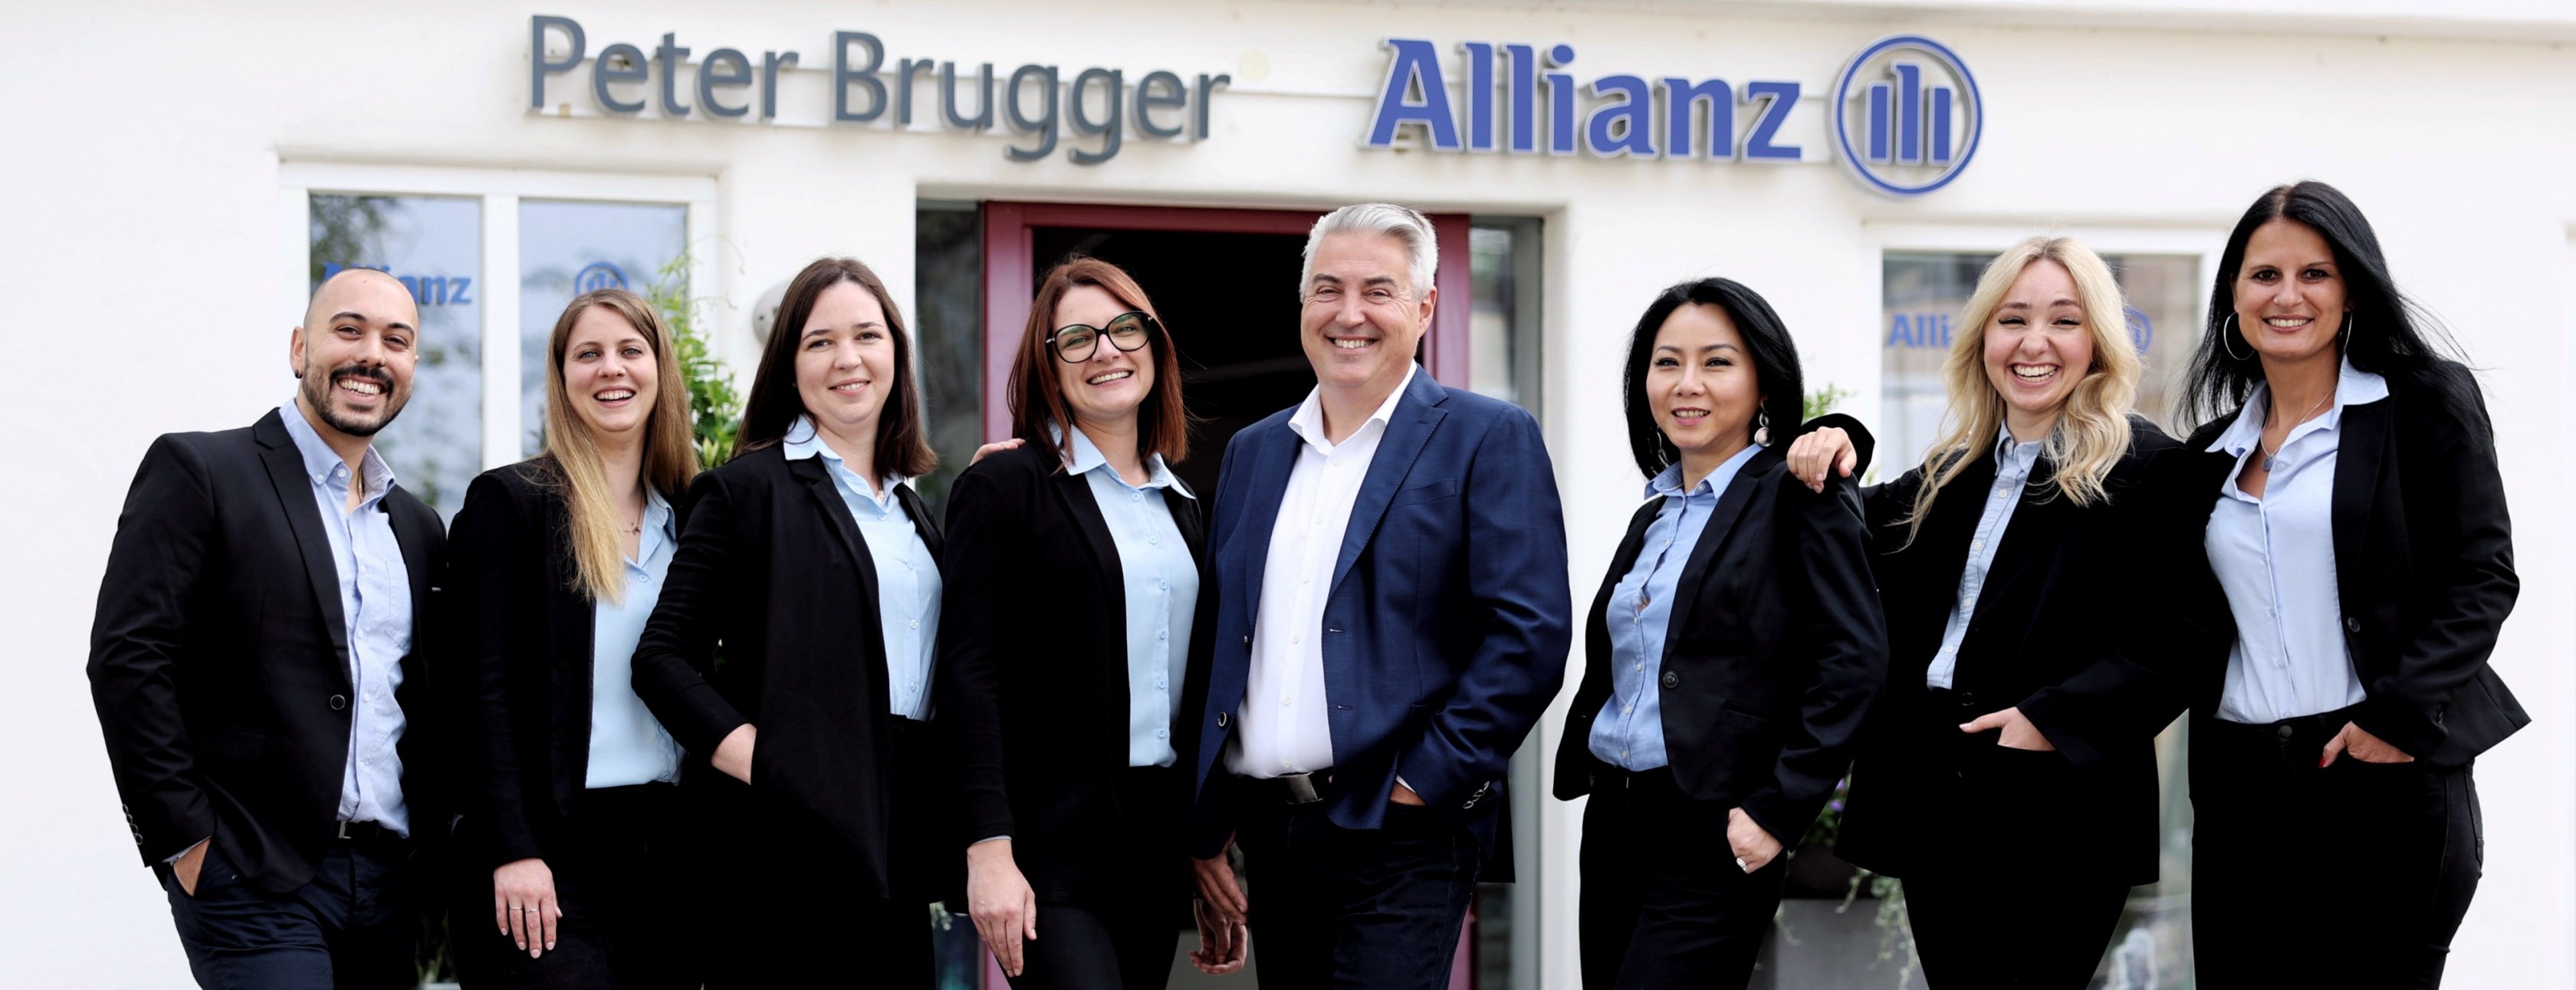 Allianz Versicherung Peter Brugger Dettingen - Das dynamische Team der Allianz Peter Brugger